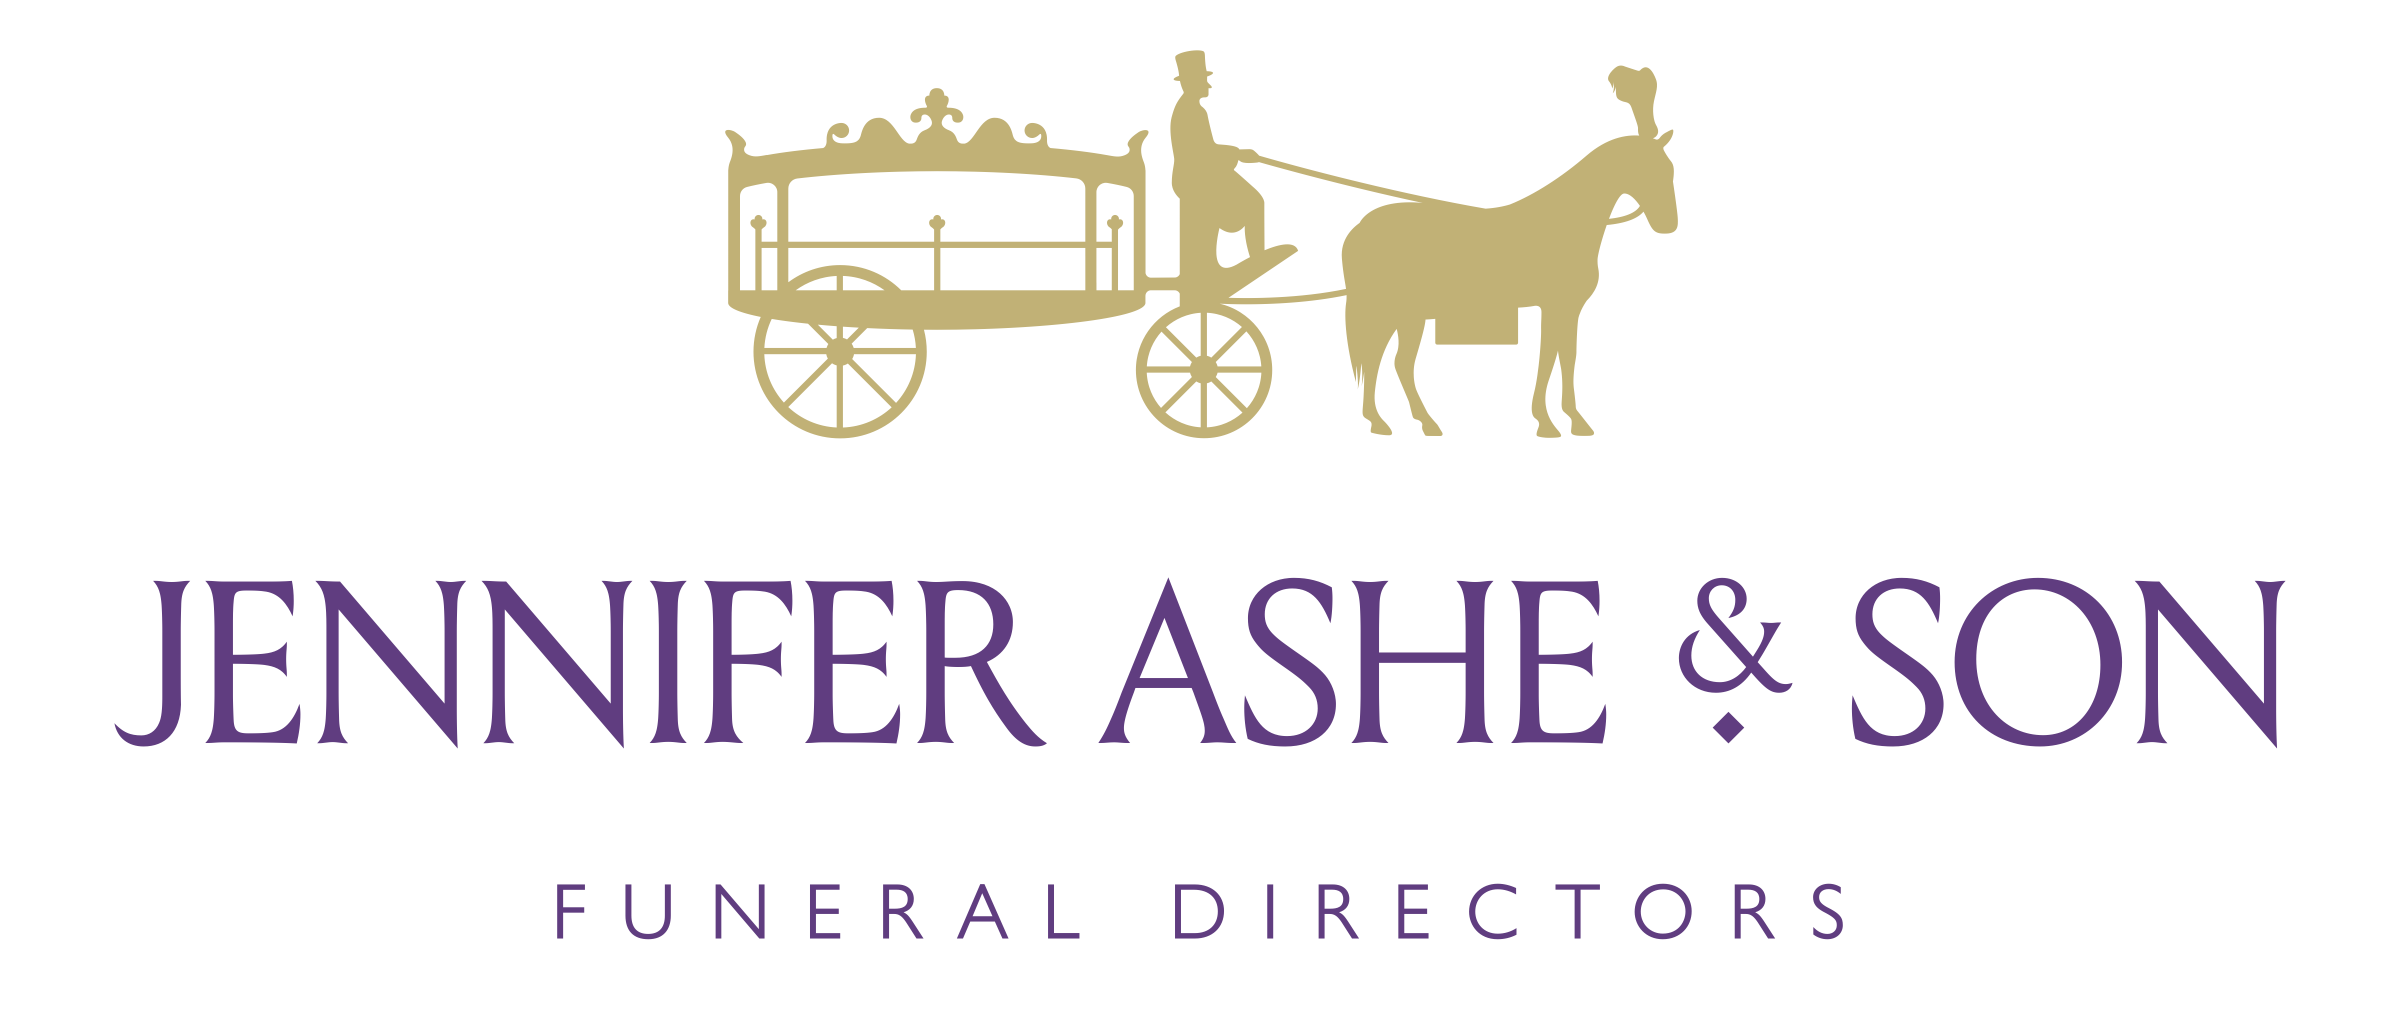 jennifer ashe & son funeral directors